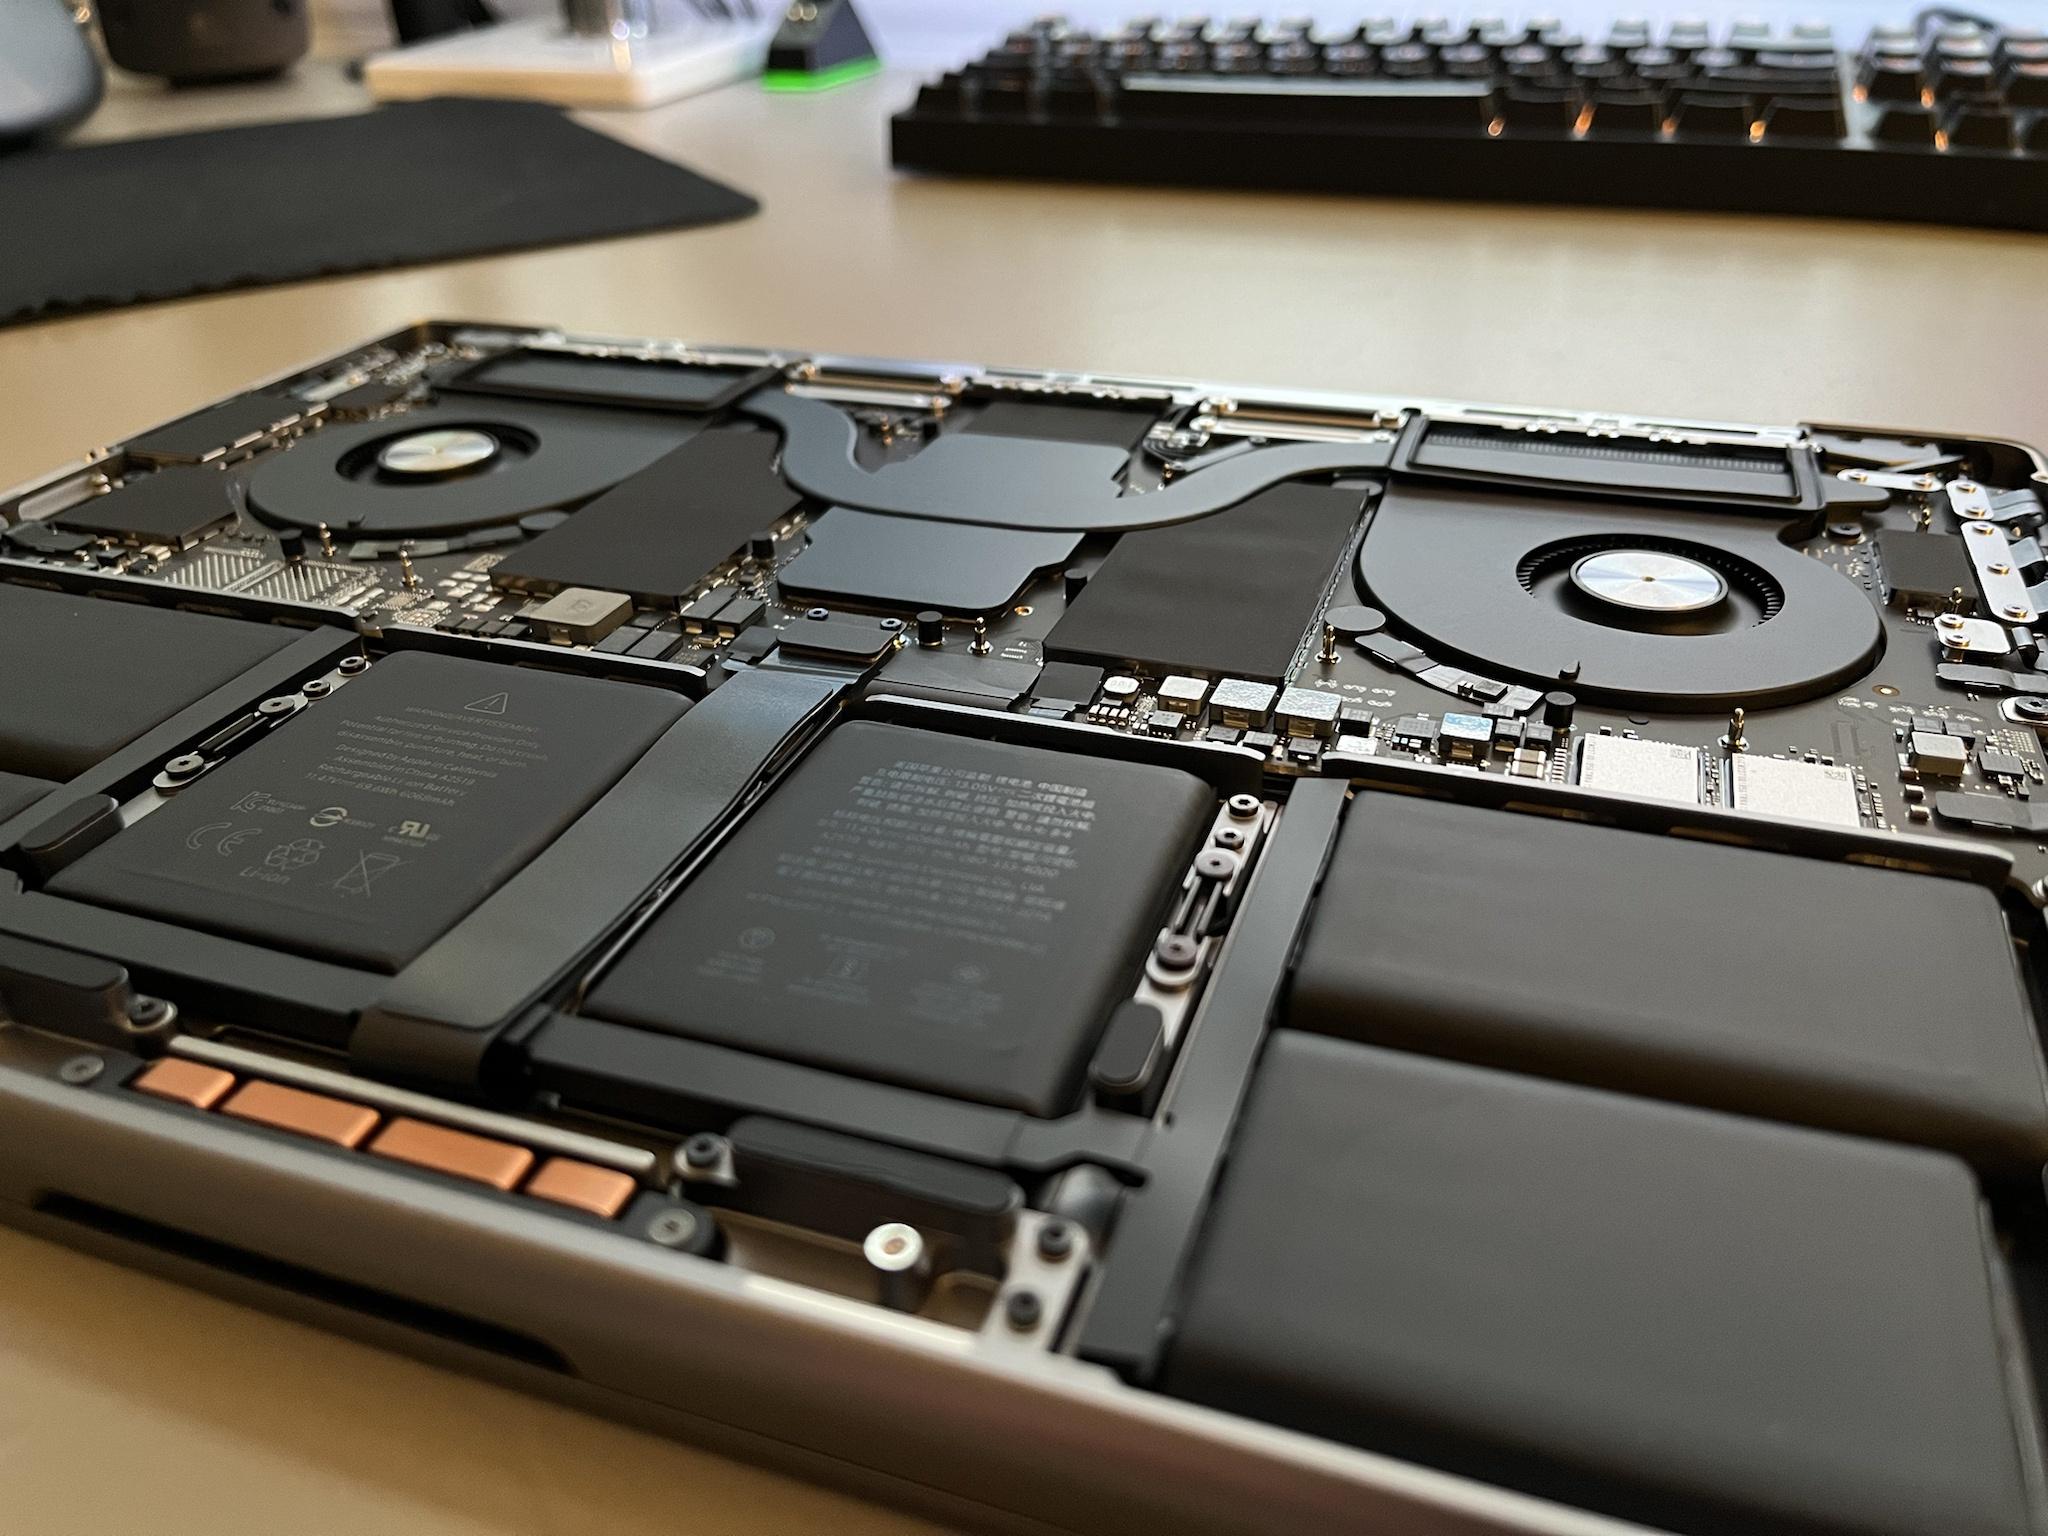 New 14inch and 16inch MacBook Pro Teardown Photos Reveal Modular I/O